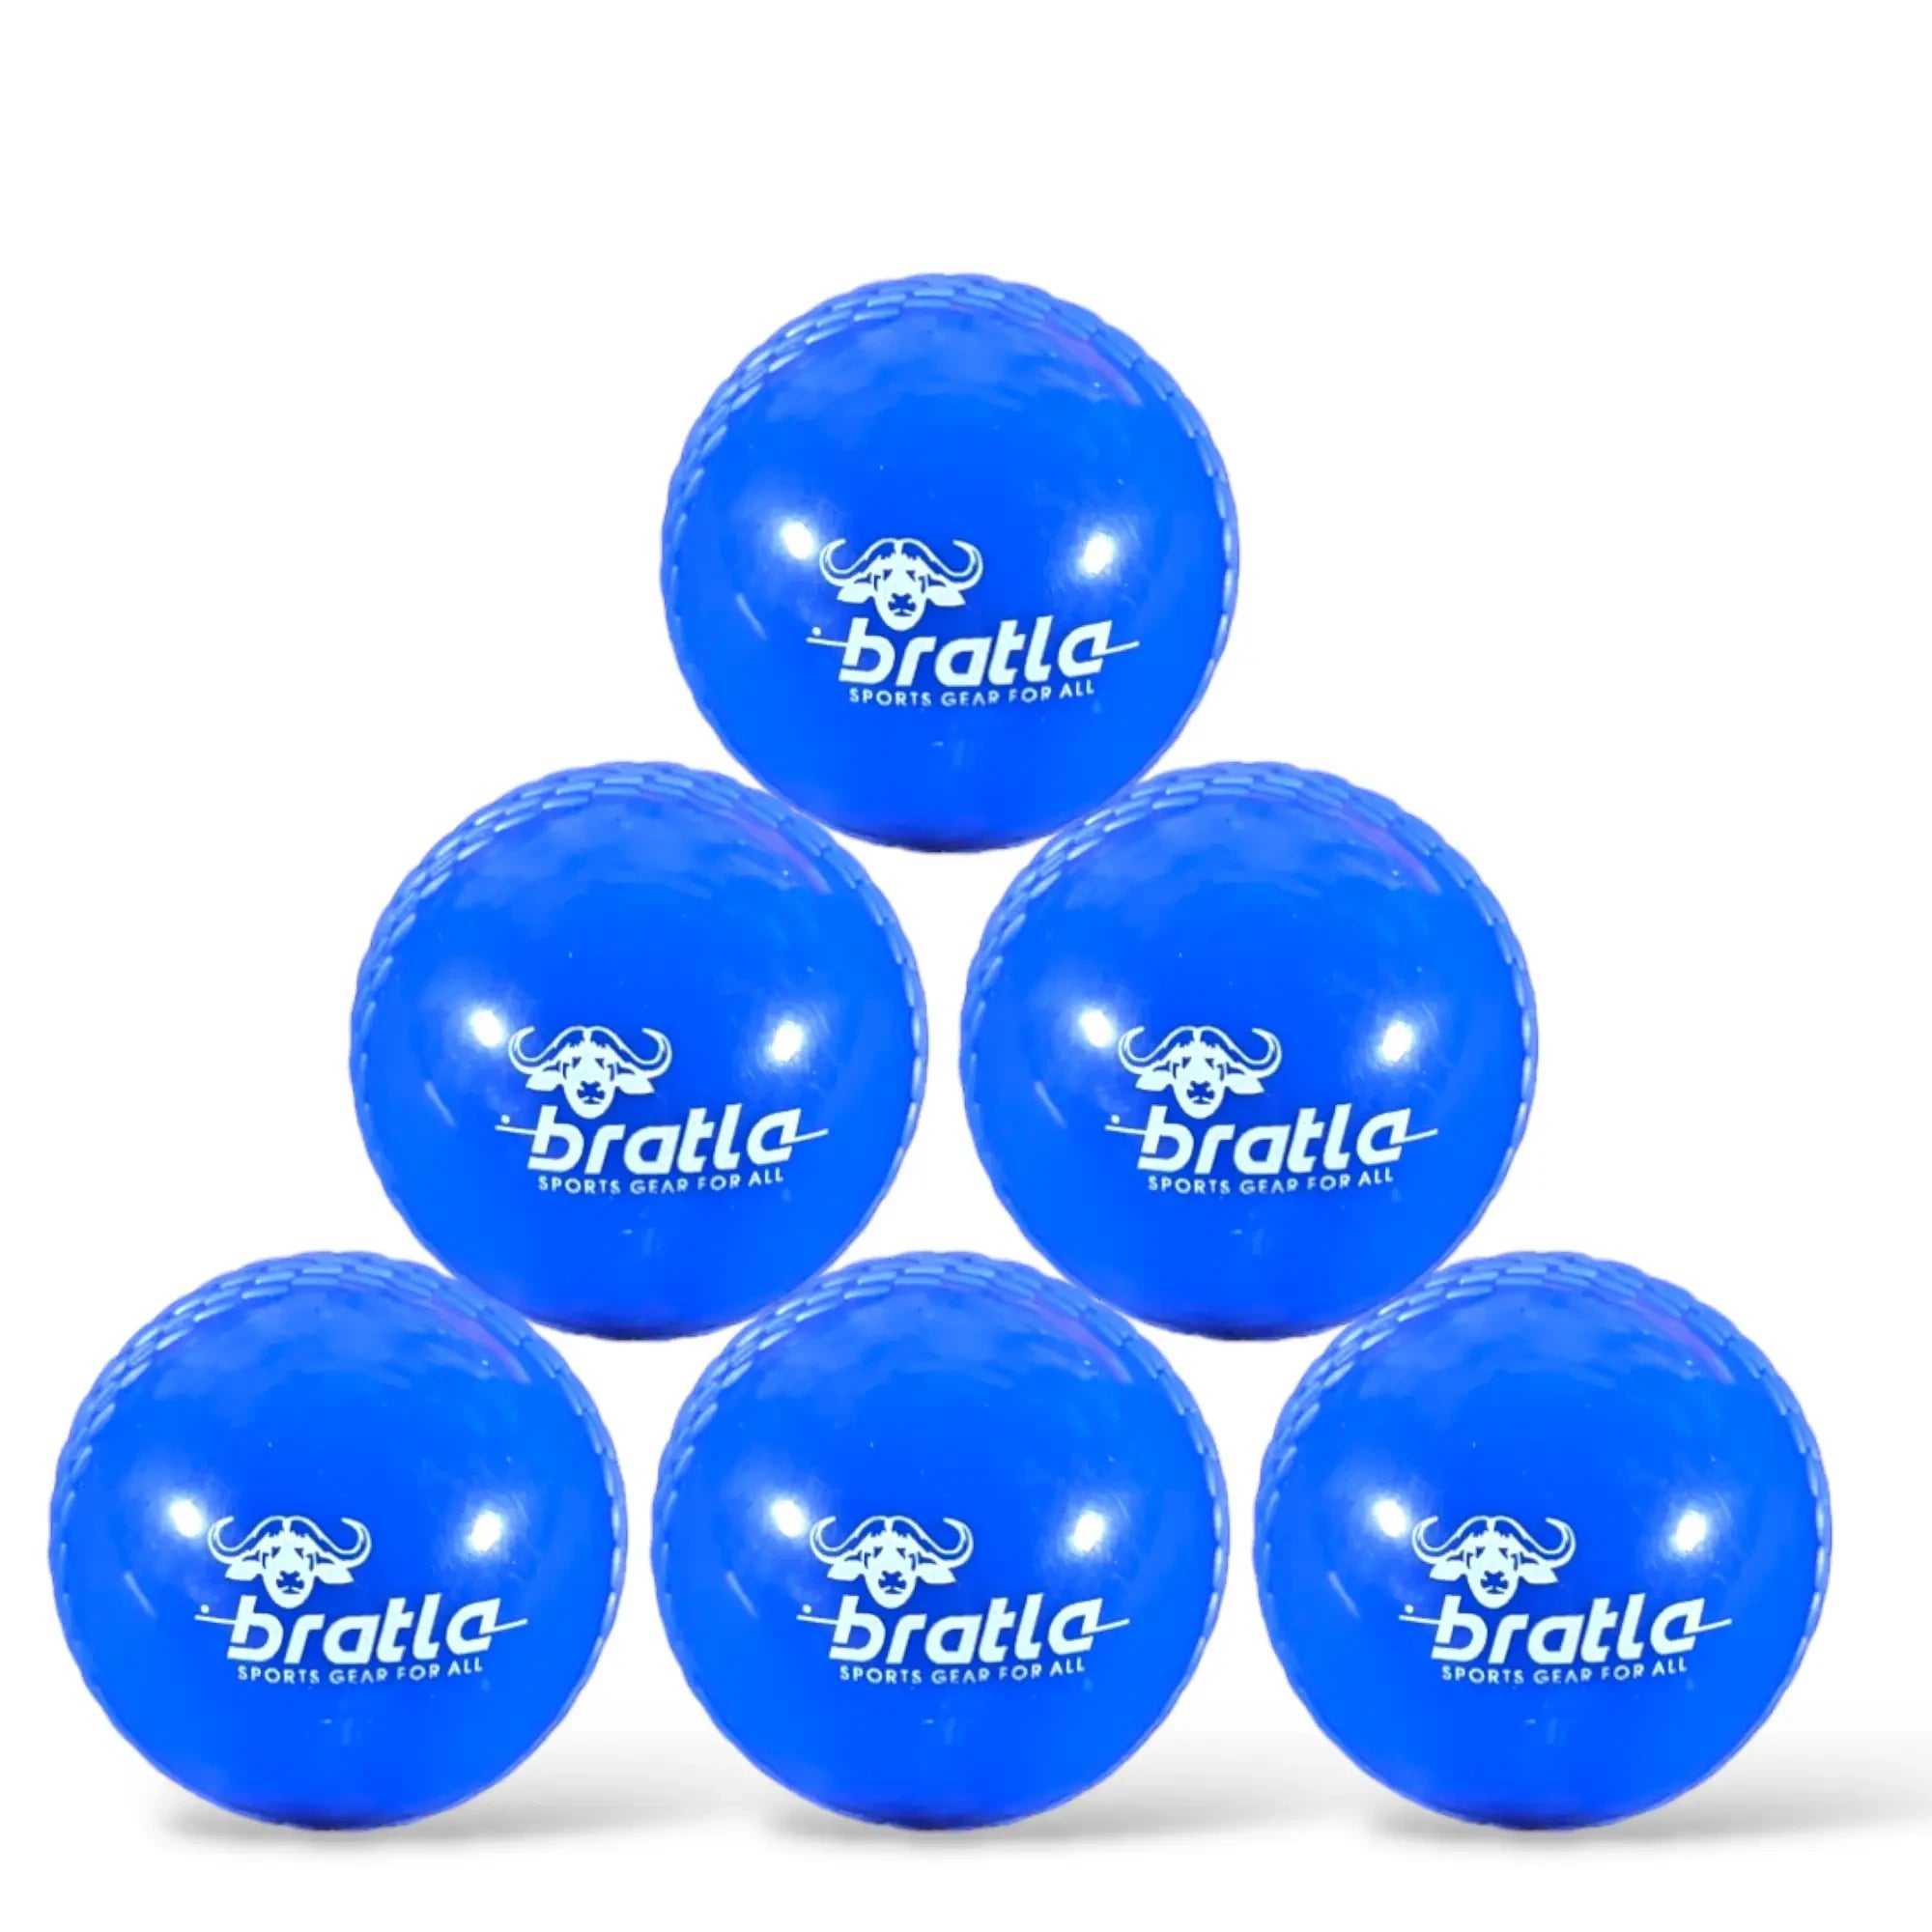 Bratla Wind Cricket Balls - Soft Training Practice Cricket Air Balls for Coaching Indoor & Outdoor - Pack of 6 - Blue - BALL - TRAINING